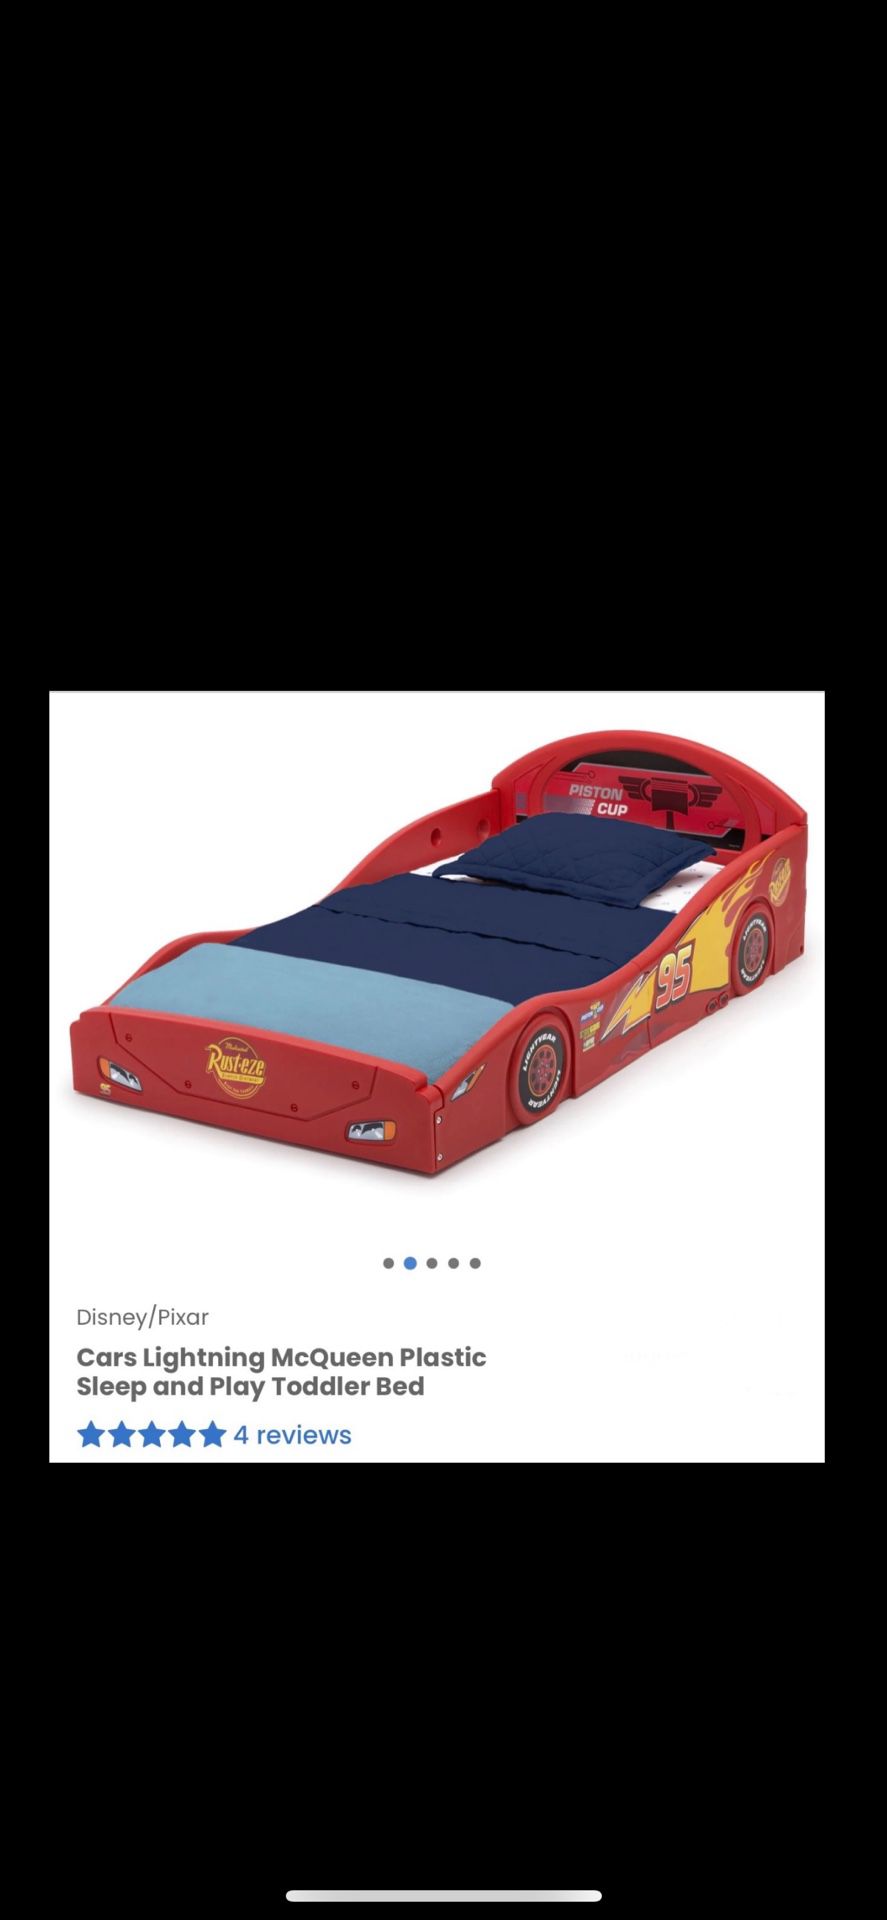 Disney Cars Lightning McQueen Plastic Toddler Bed Frame/ Cars/ Disney/ Toddler/ Kids/ Toys/ Bedroom/ Bed/ Furniture/ New